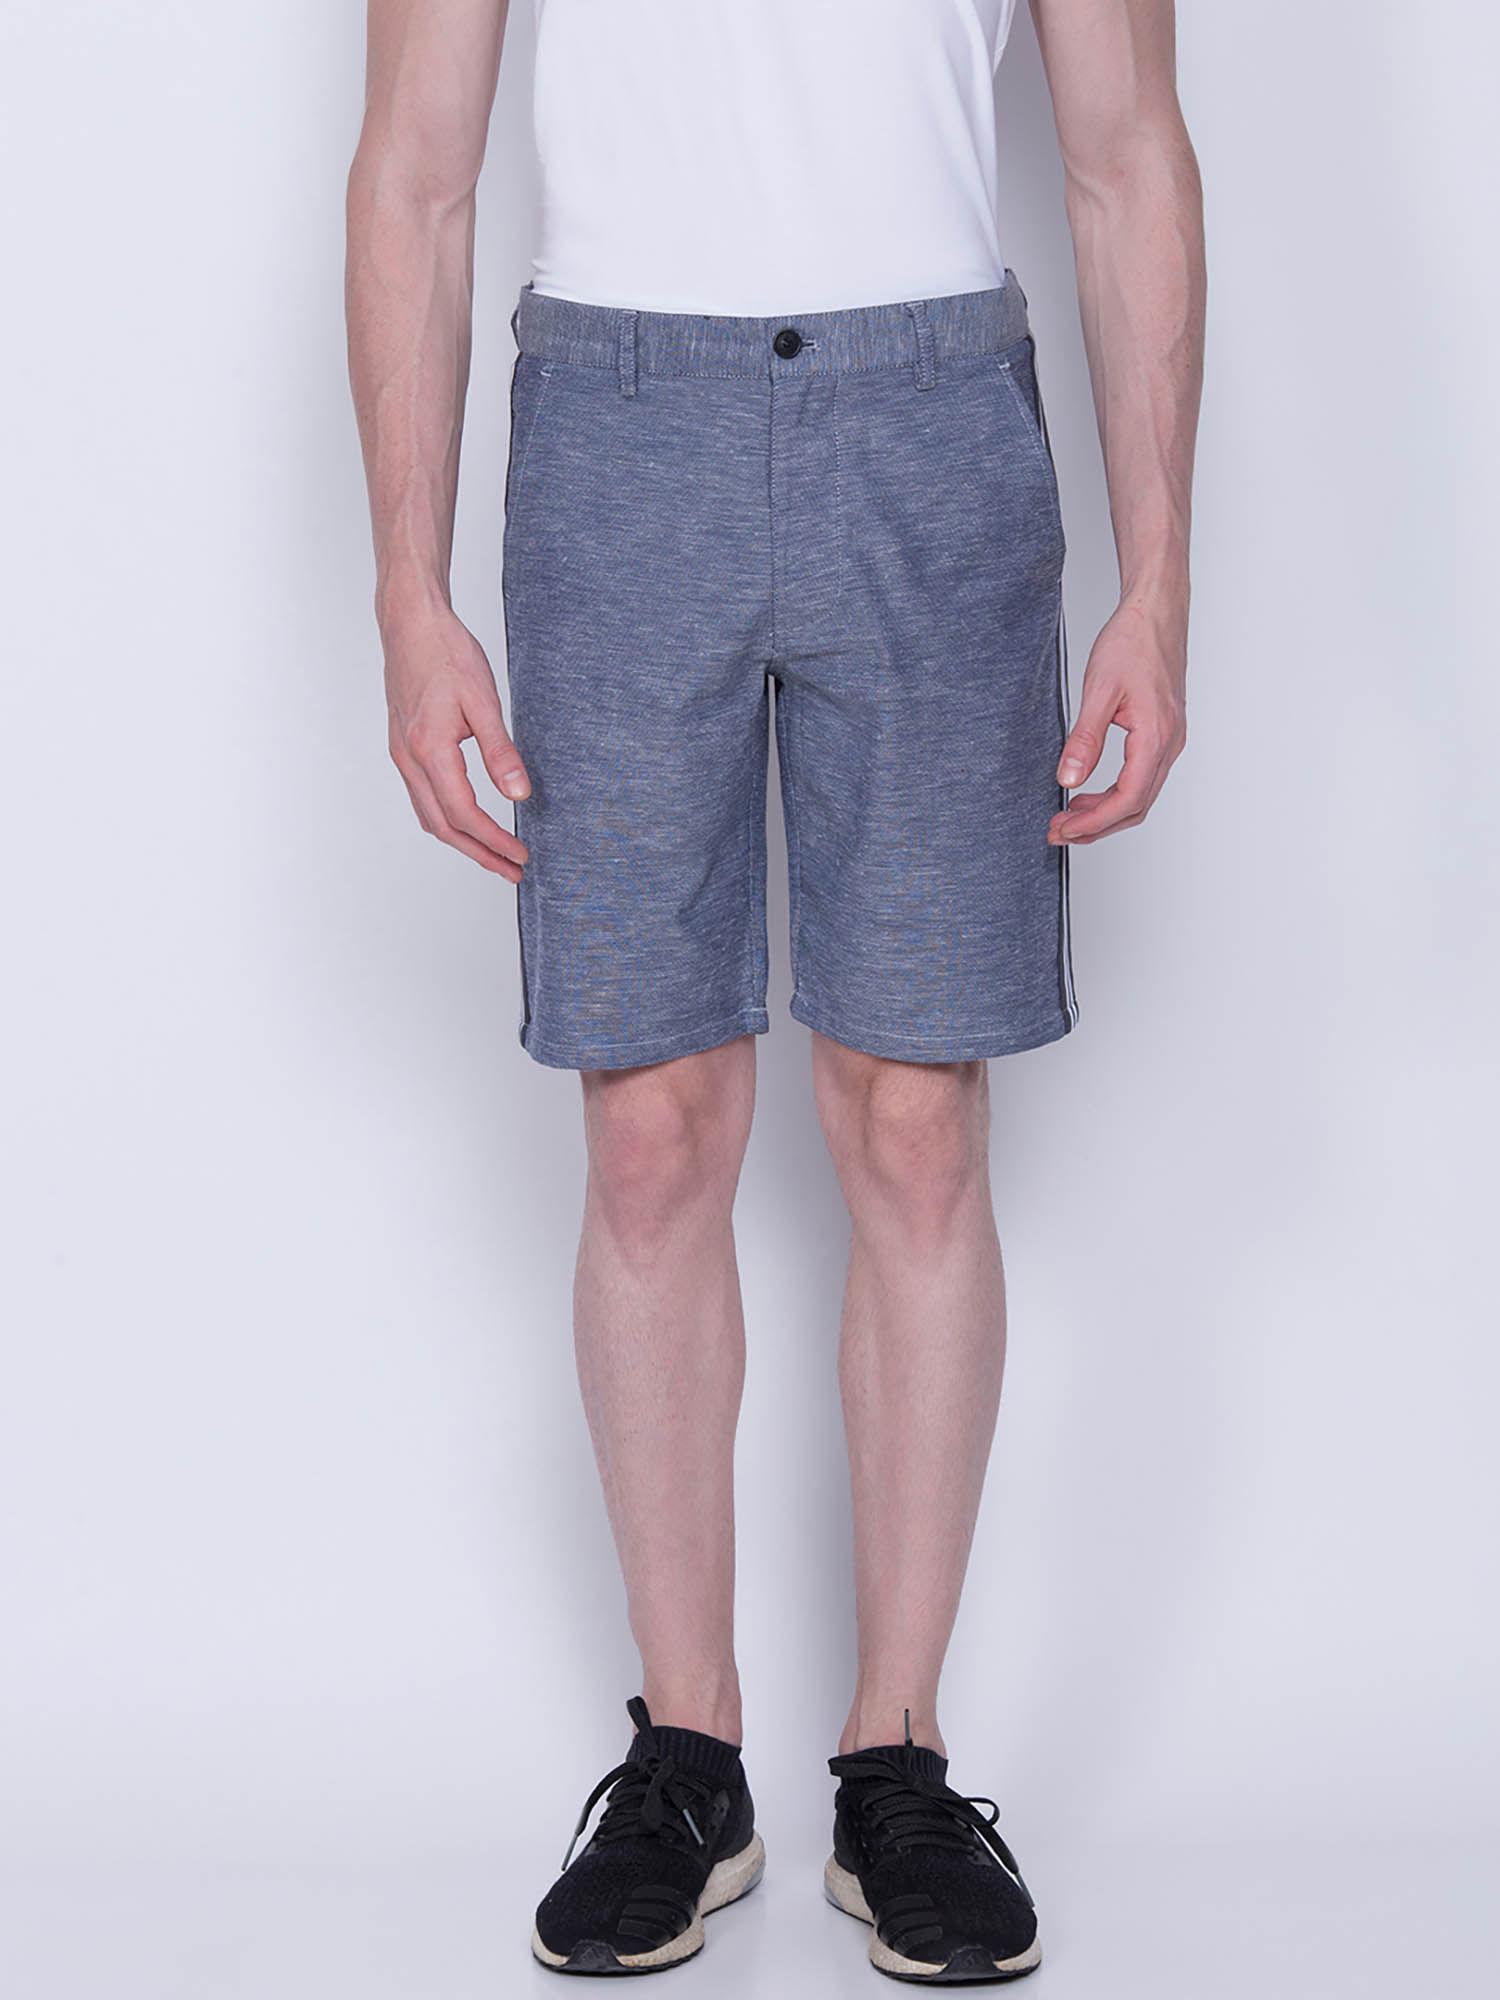 grey solid shorts